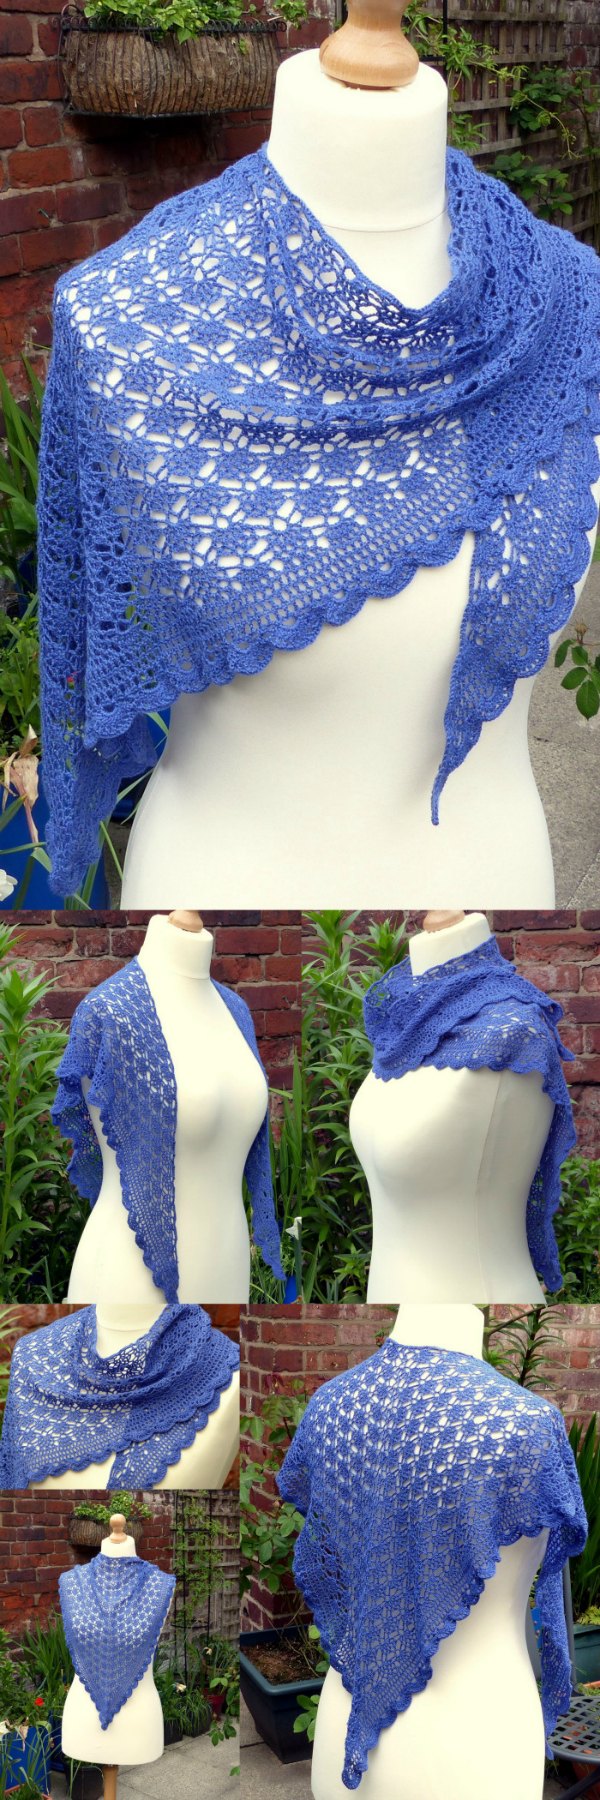 Lace Shawl Crochet Mediterranean Pattern